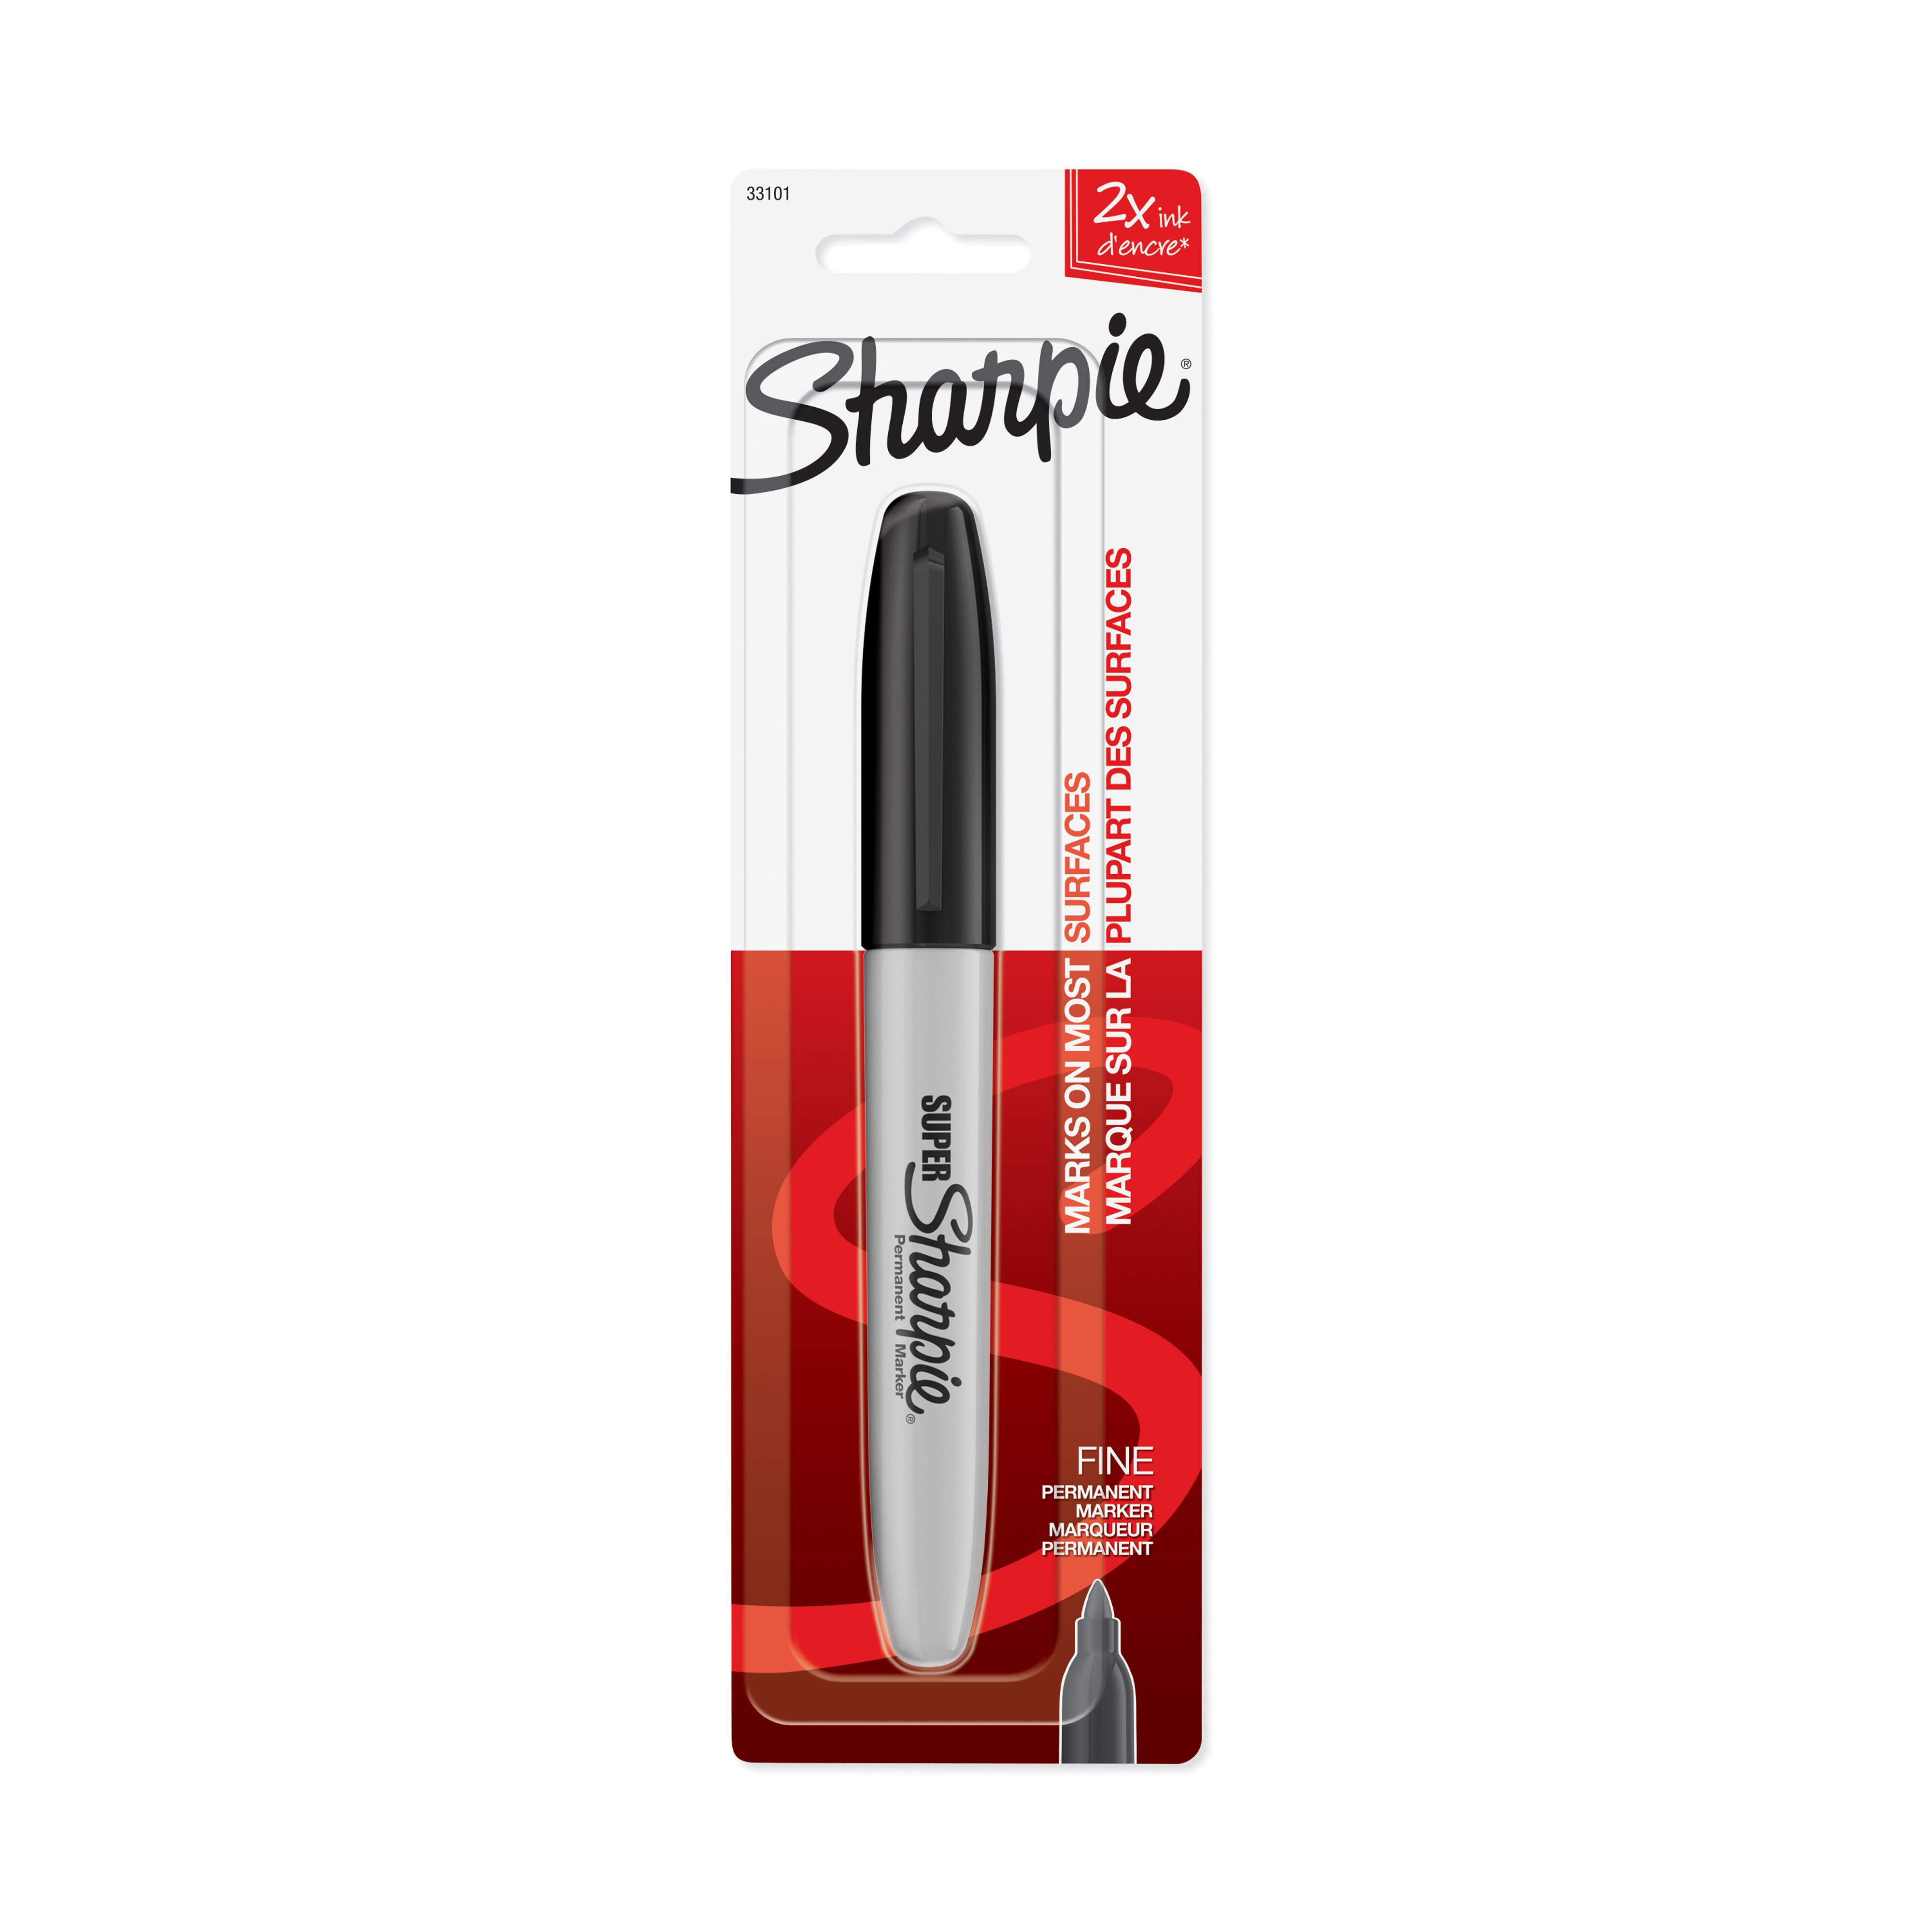  Sharpie Super Permanent Markers 